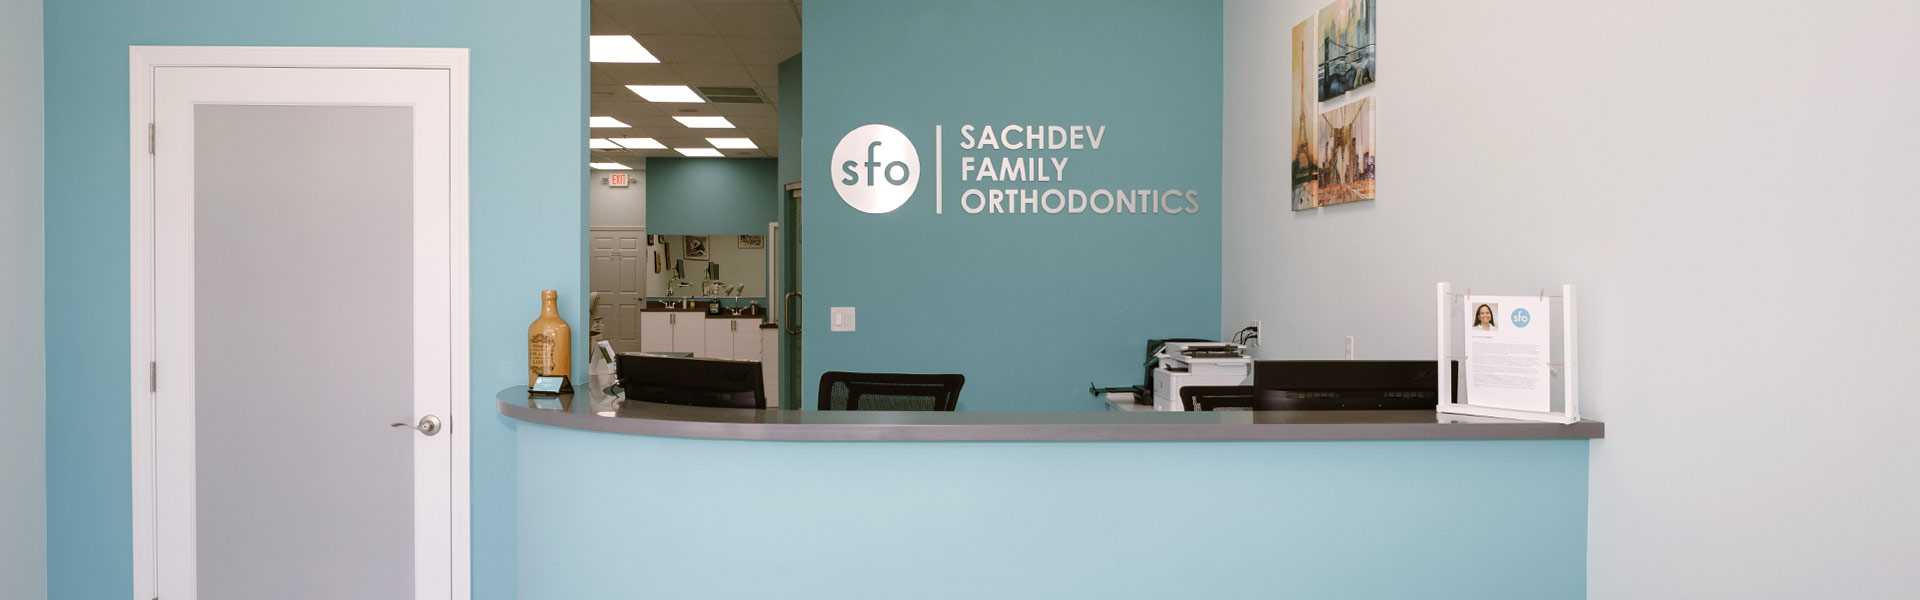 Sachdev Family Orthodontics